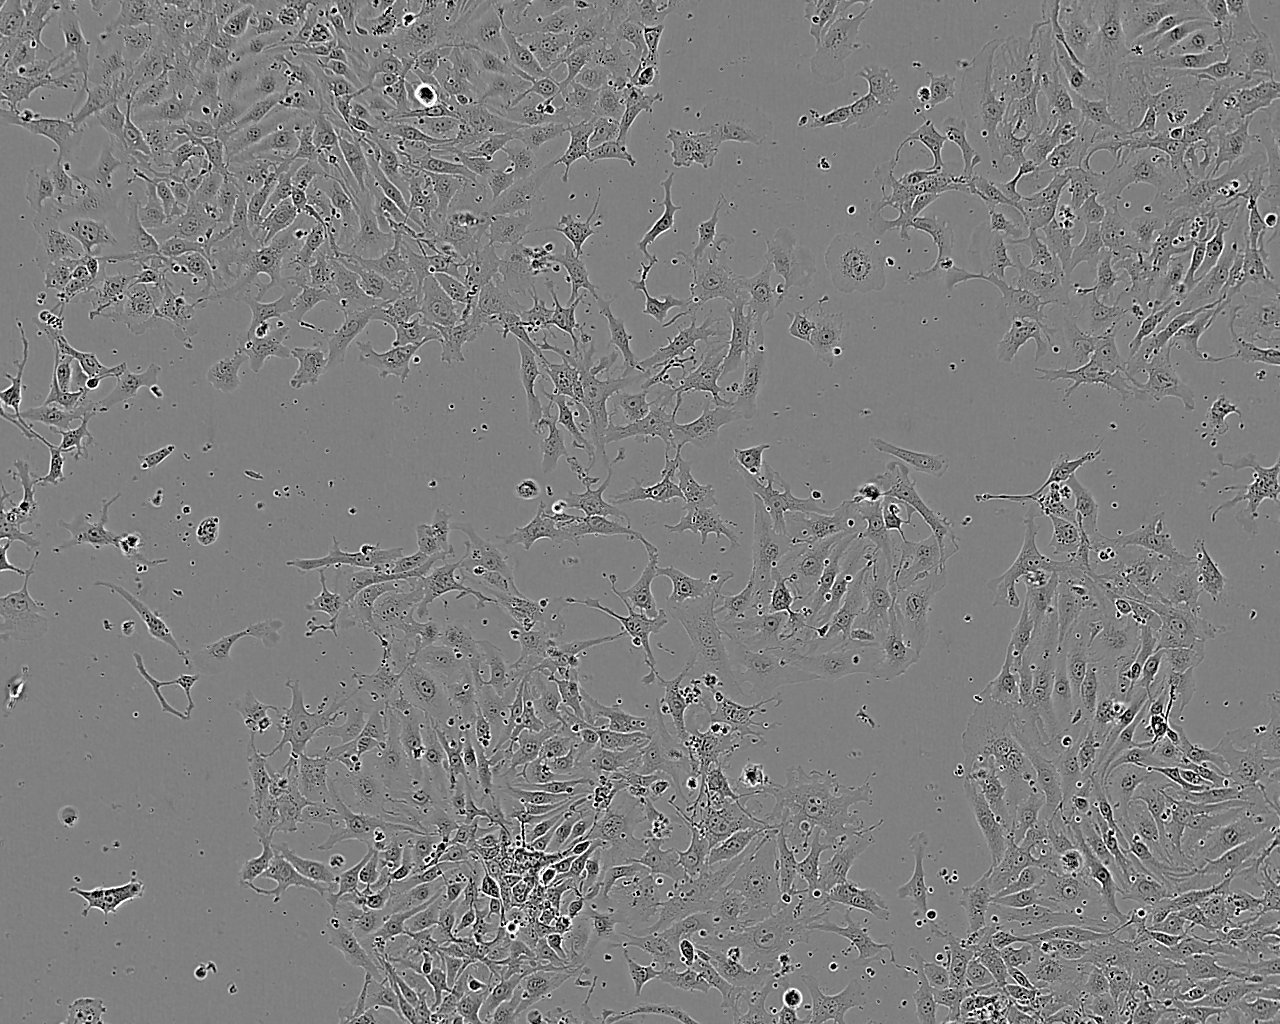 WiDr epithelioid cells人结直肠癌细胞系,WiDr epithelioid cells